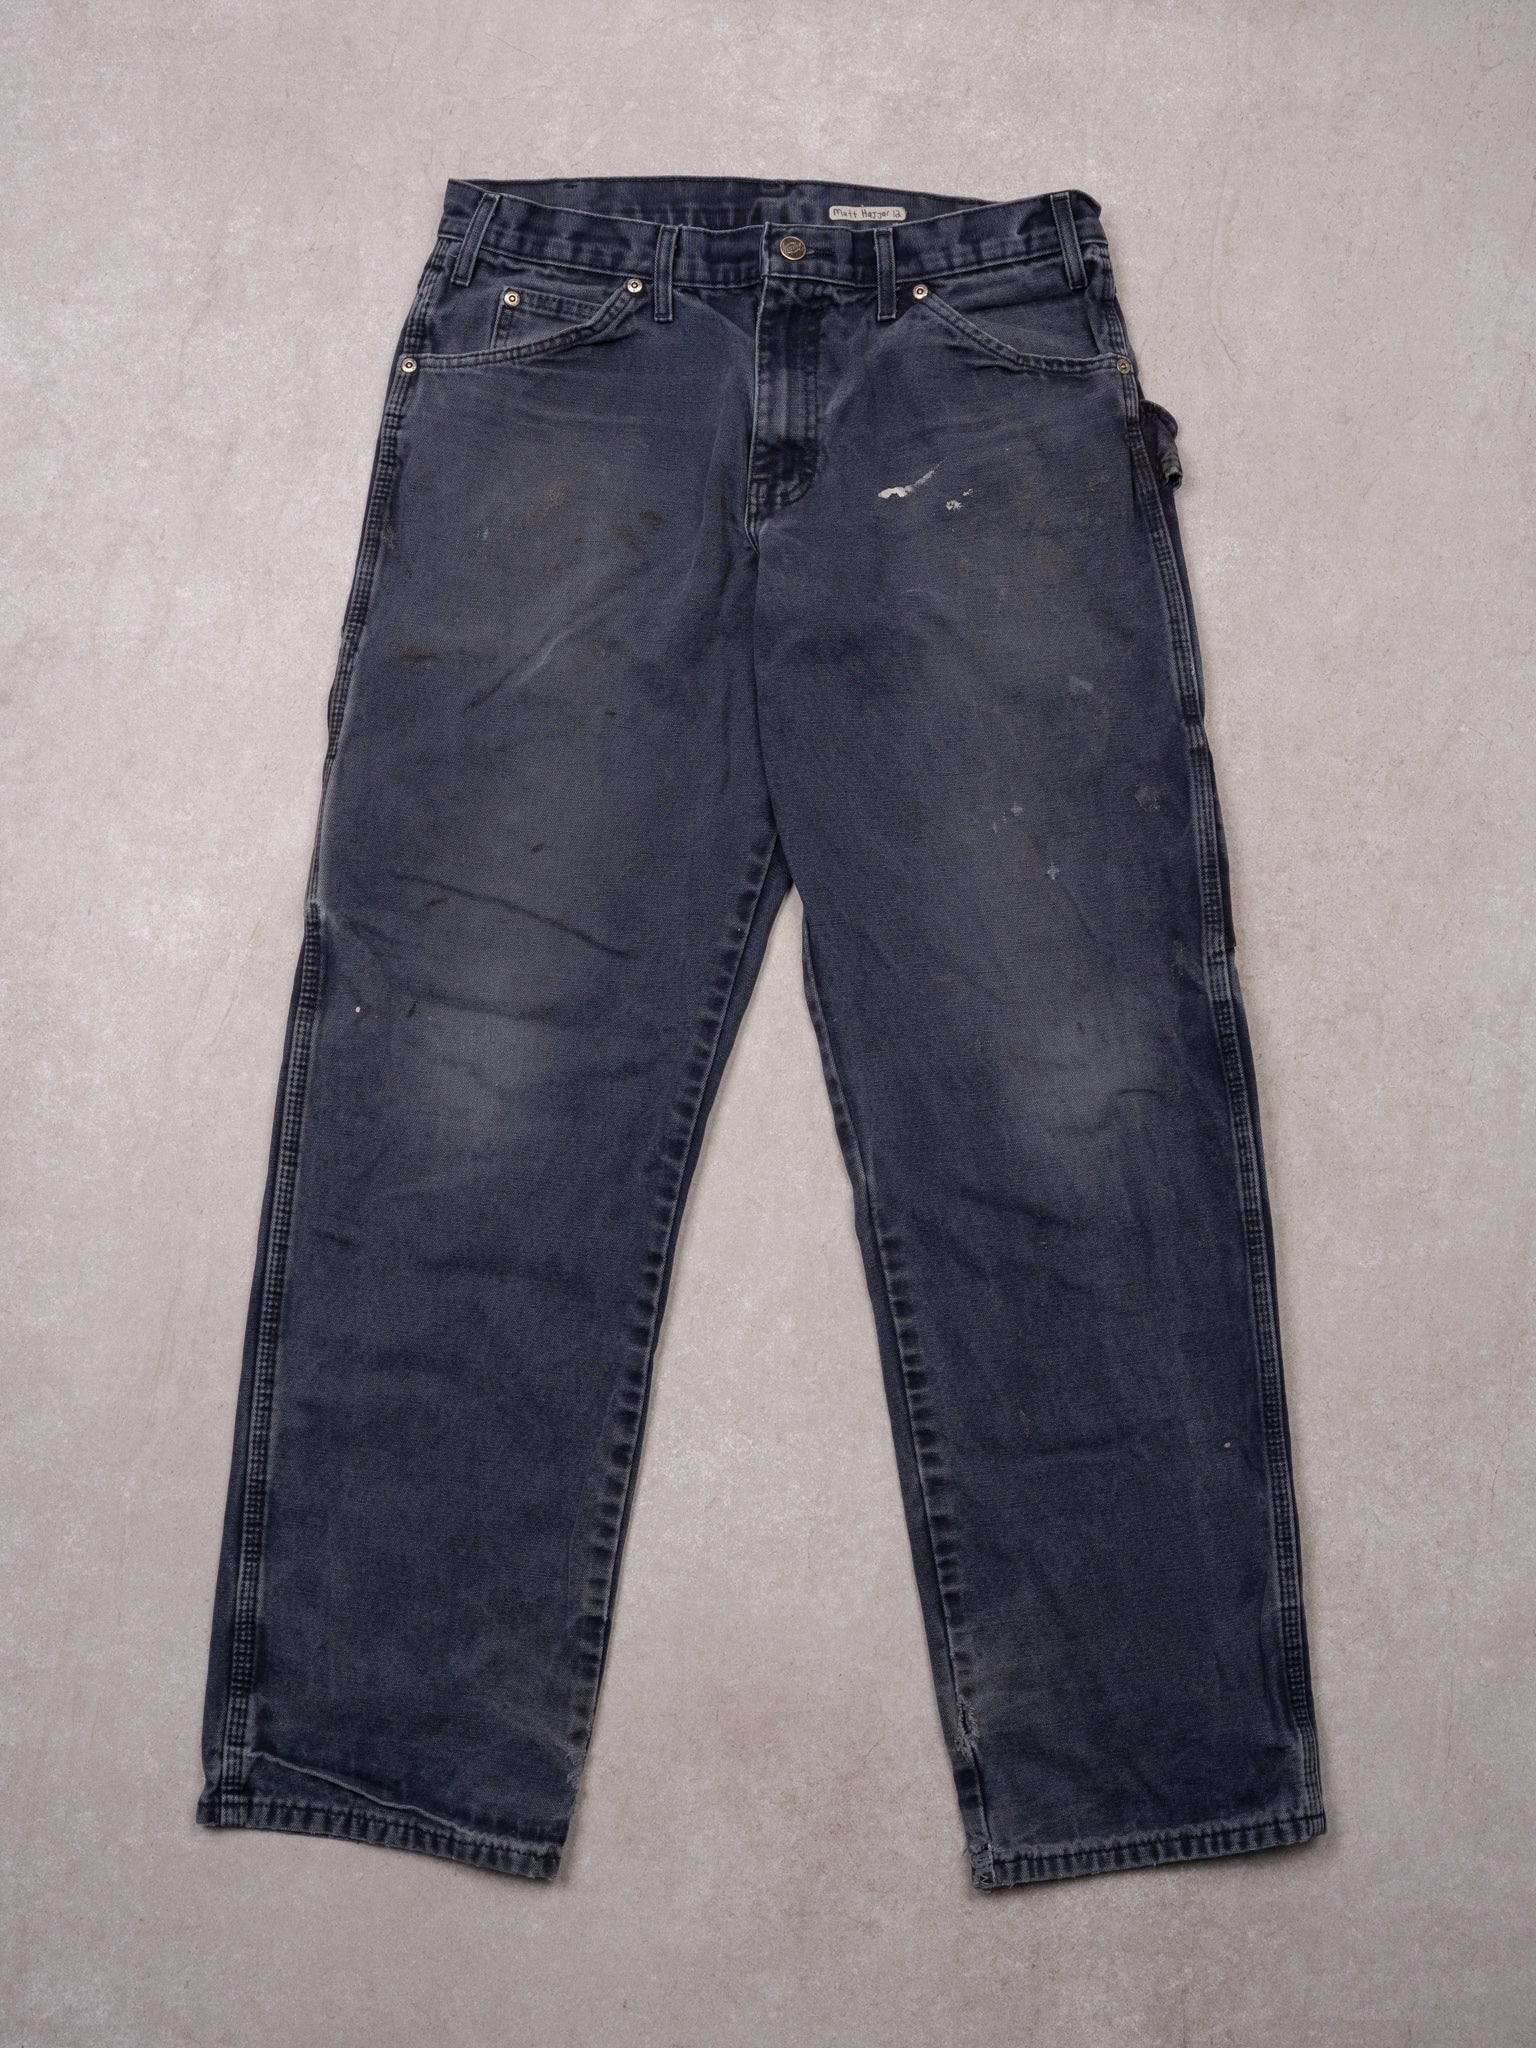 Vintage Dickies Washed Blue Carpenter Pants (32x31)